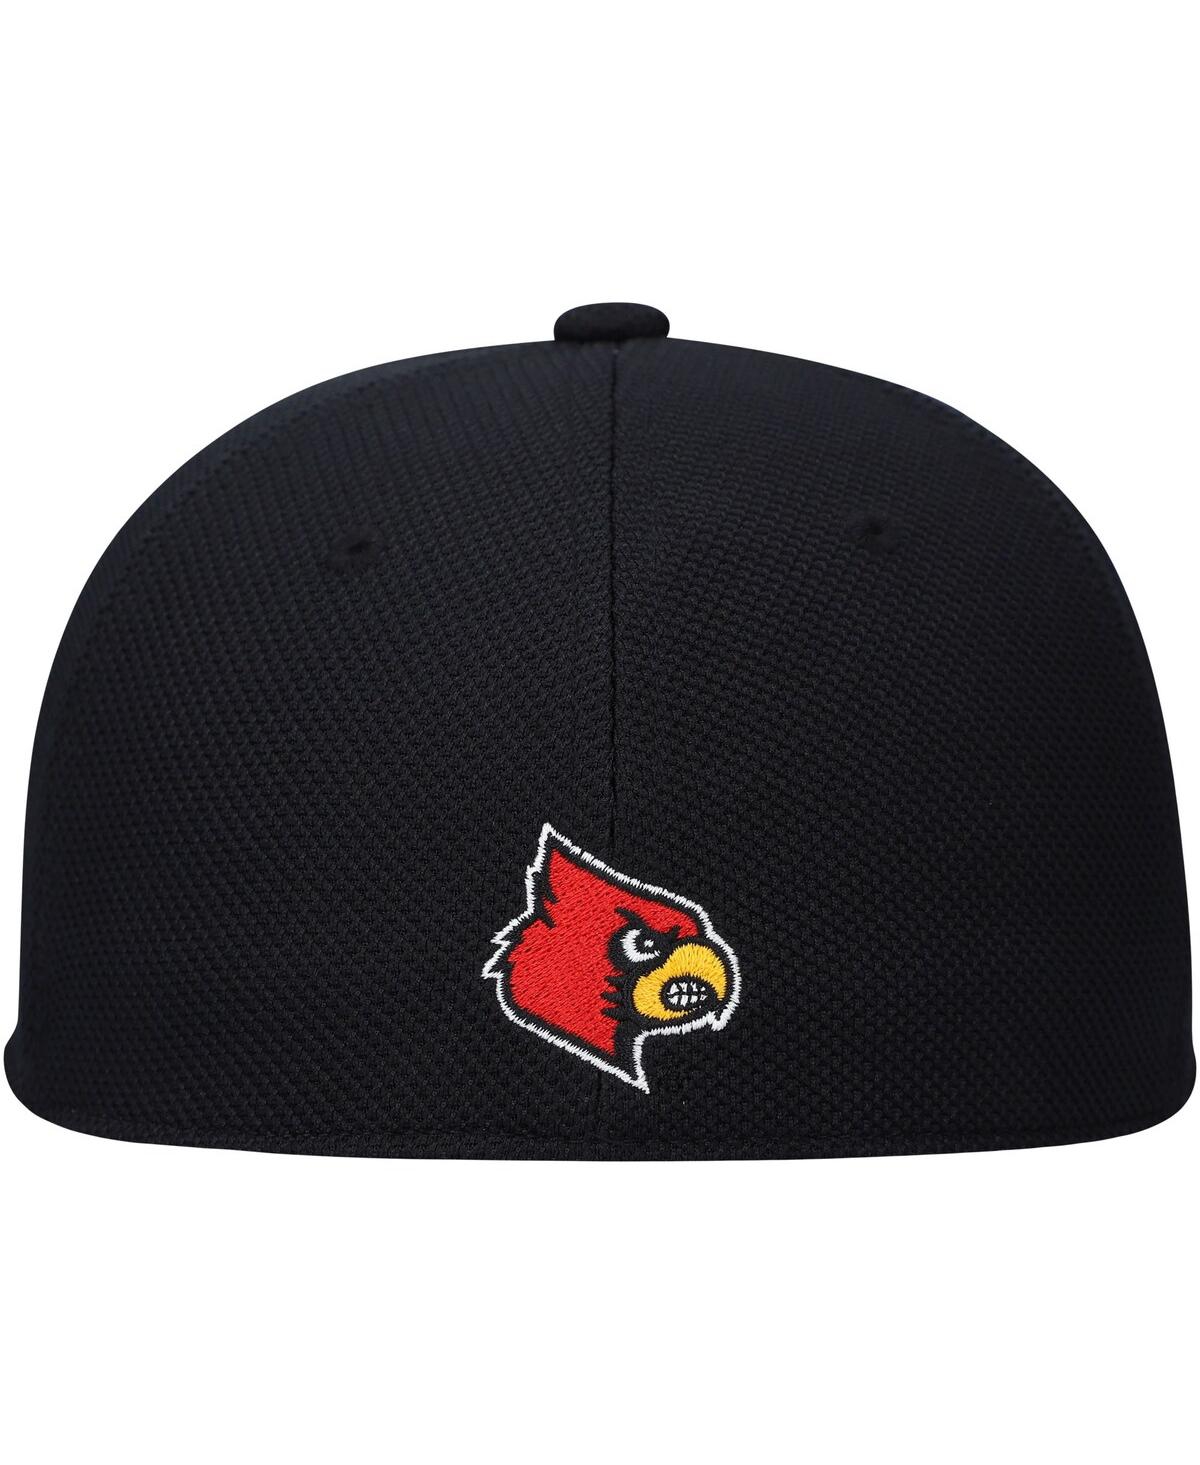 Shop Adidas Originals Men's Adidas Black Louisville Cardinals On-field Baseball Fitted Hat